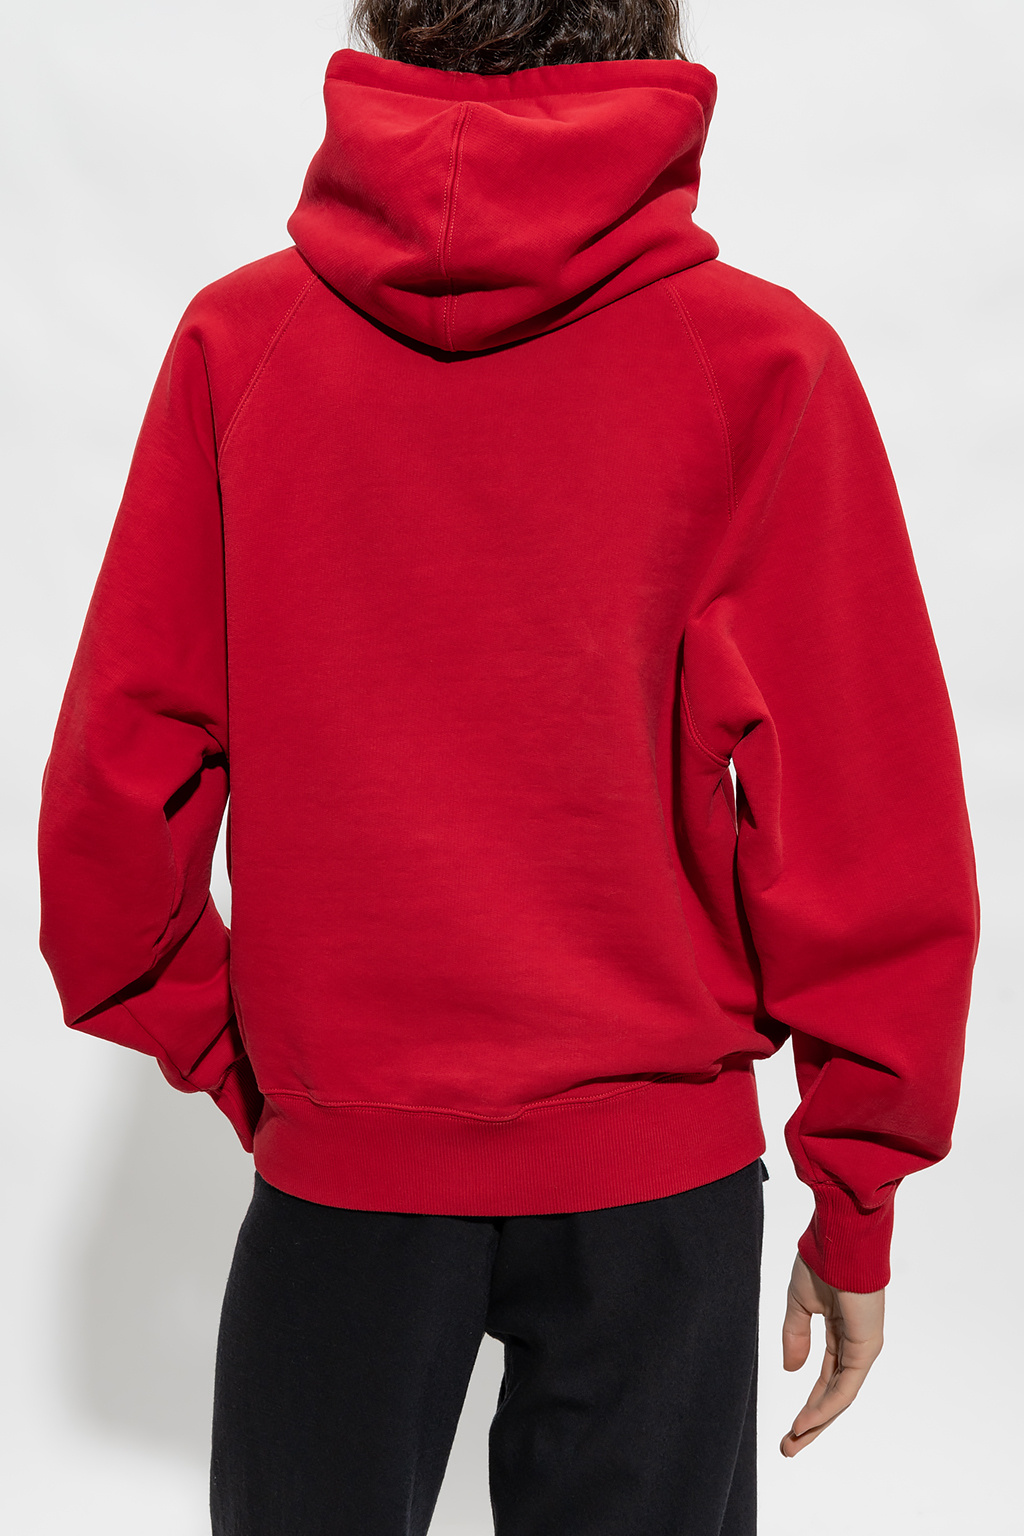 Paul Smith Gray Lambswool Sweater N1SSG4 T-shirt Vertical Moda Uomo